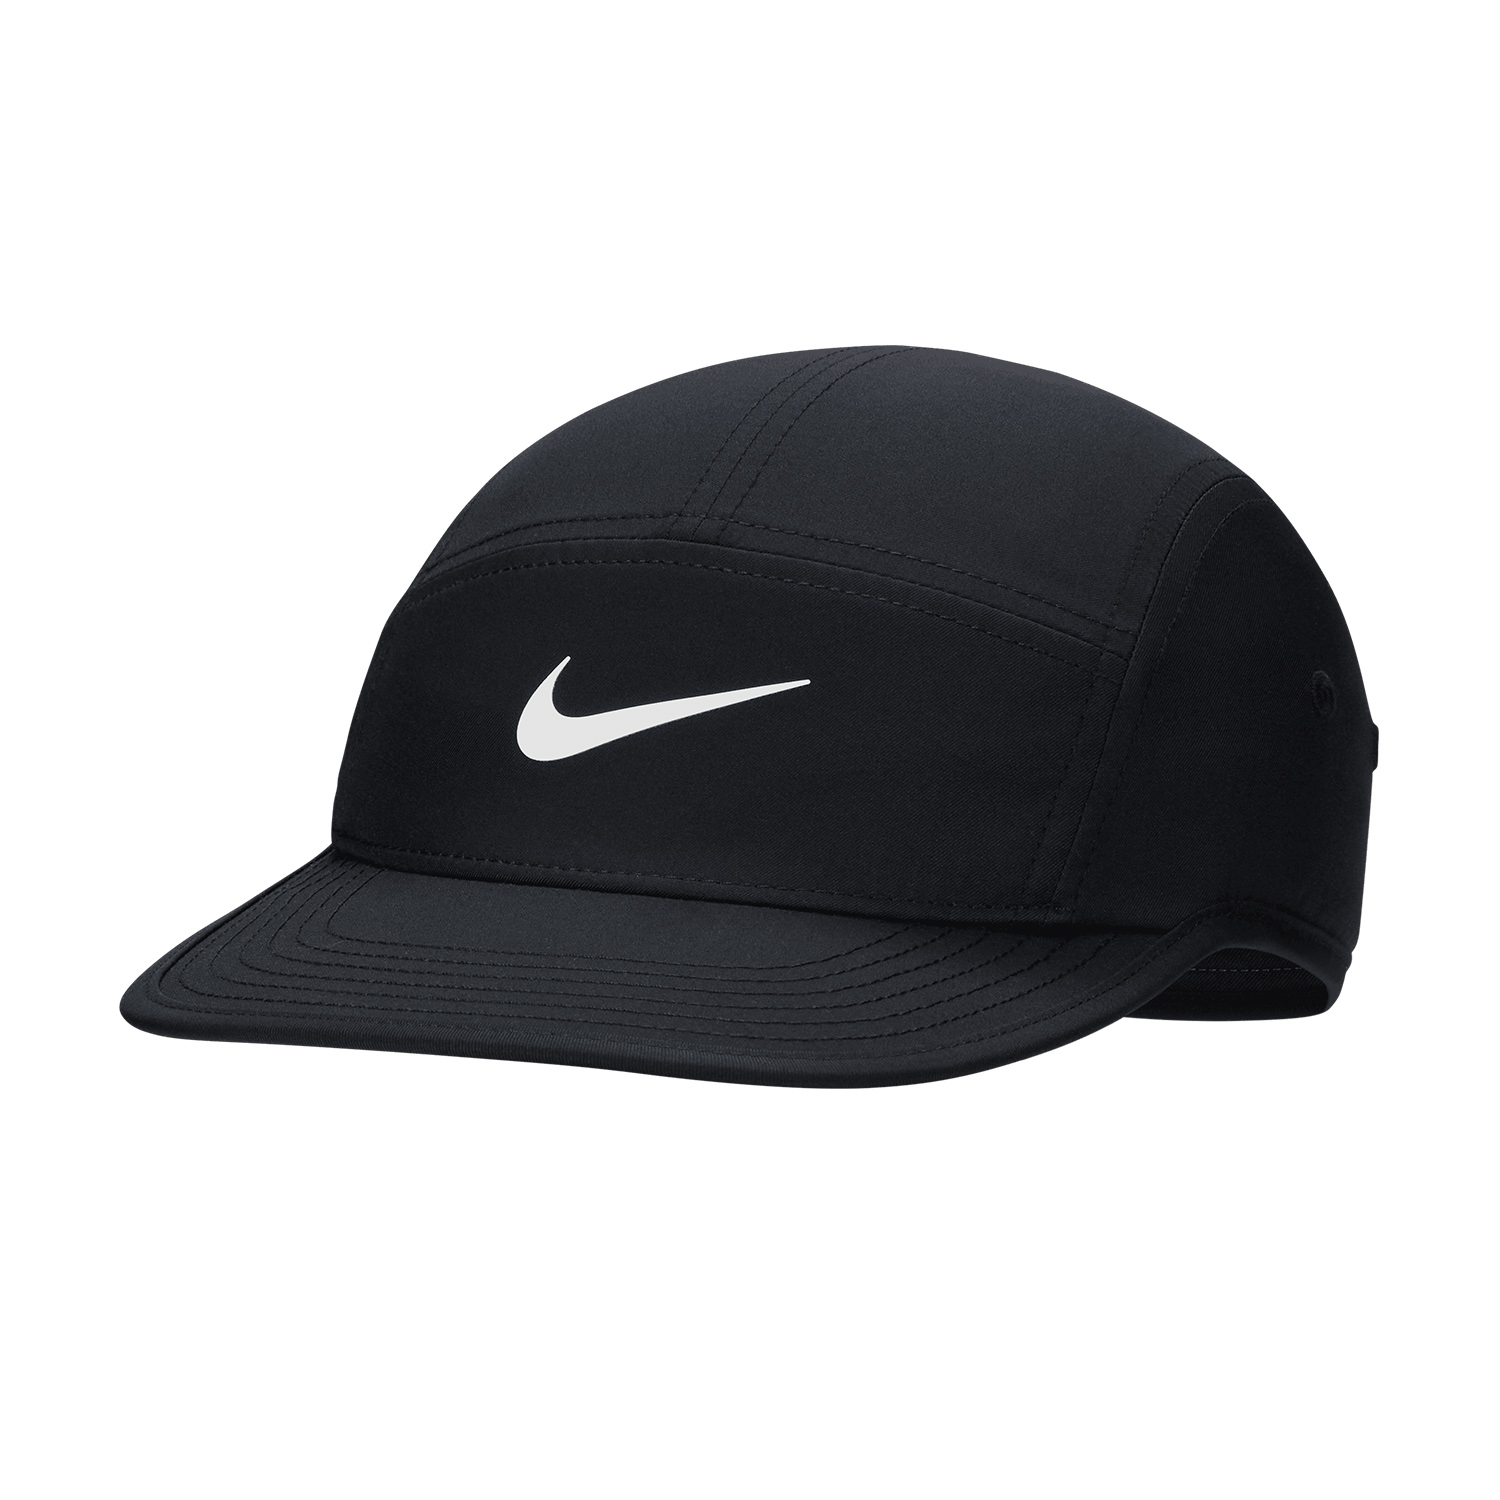 Nike Dri-FIT Fly Running Cap - Black/Anthracite/White